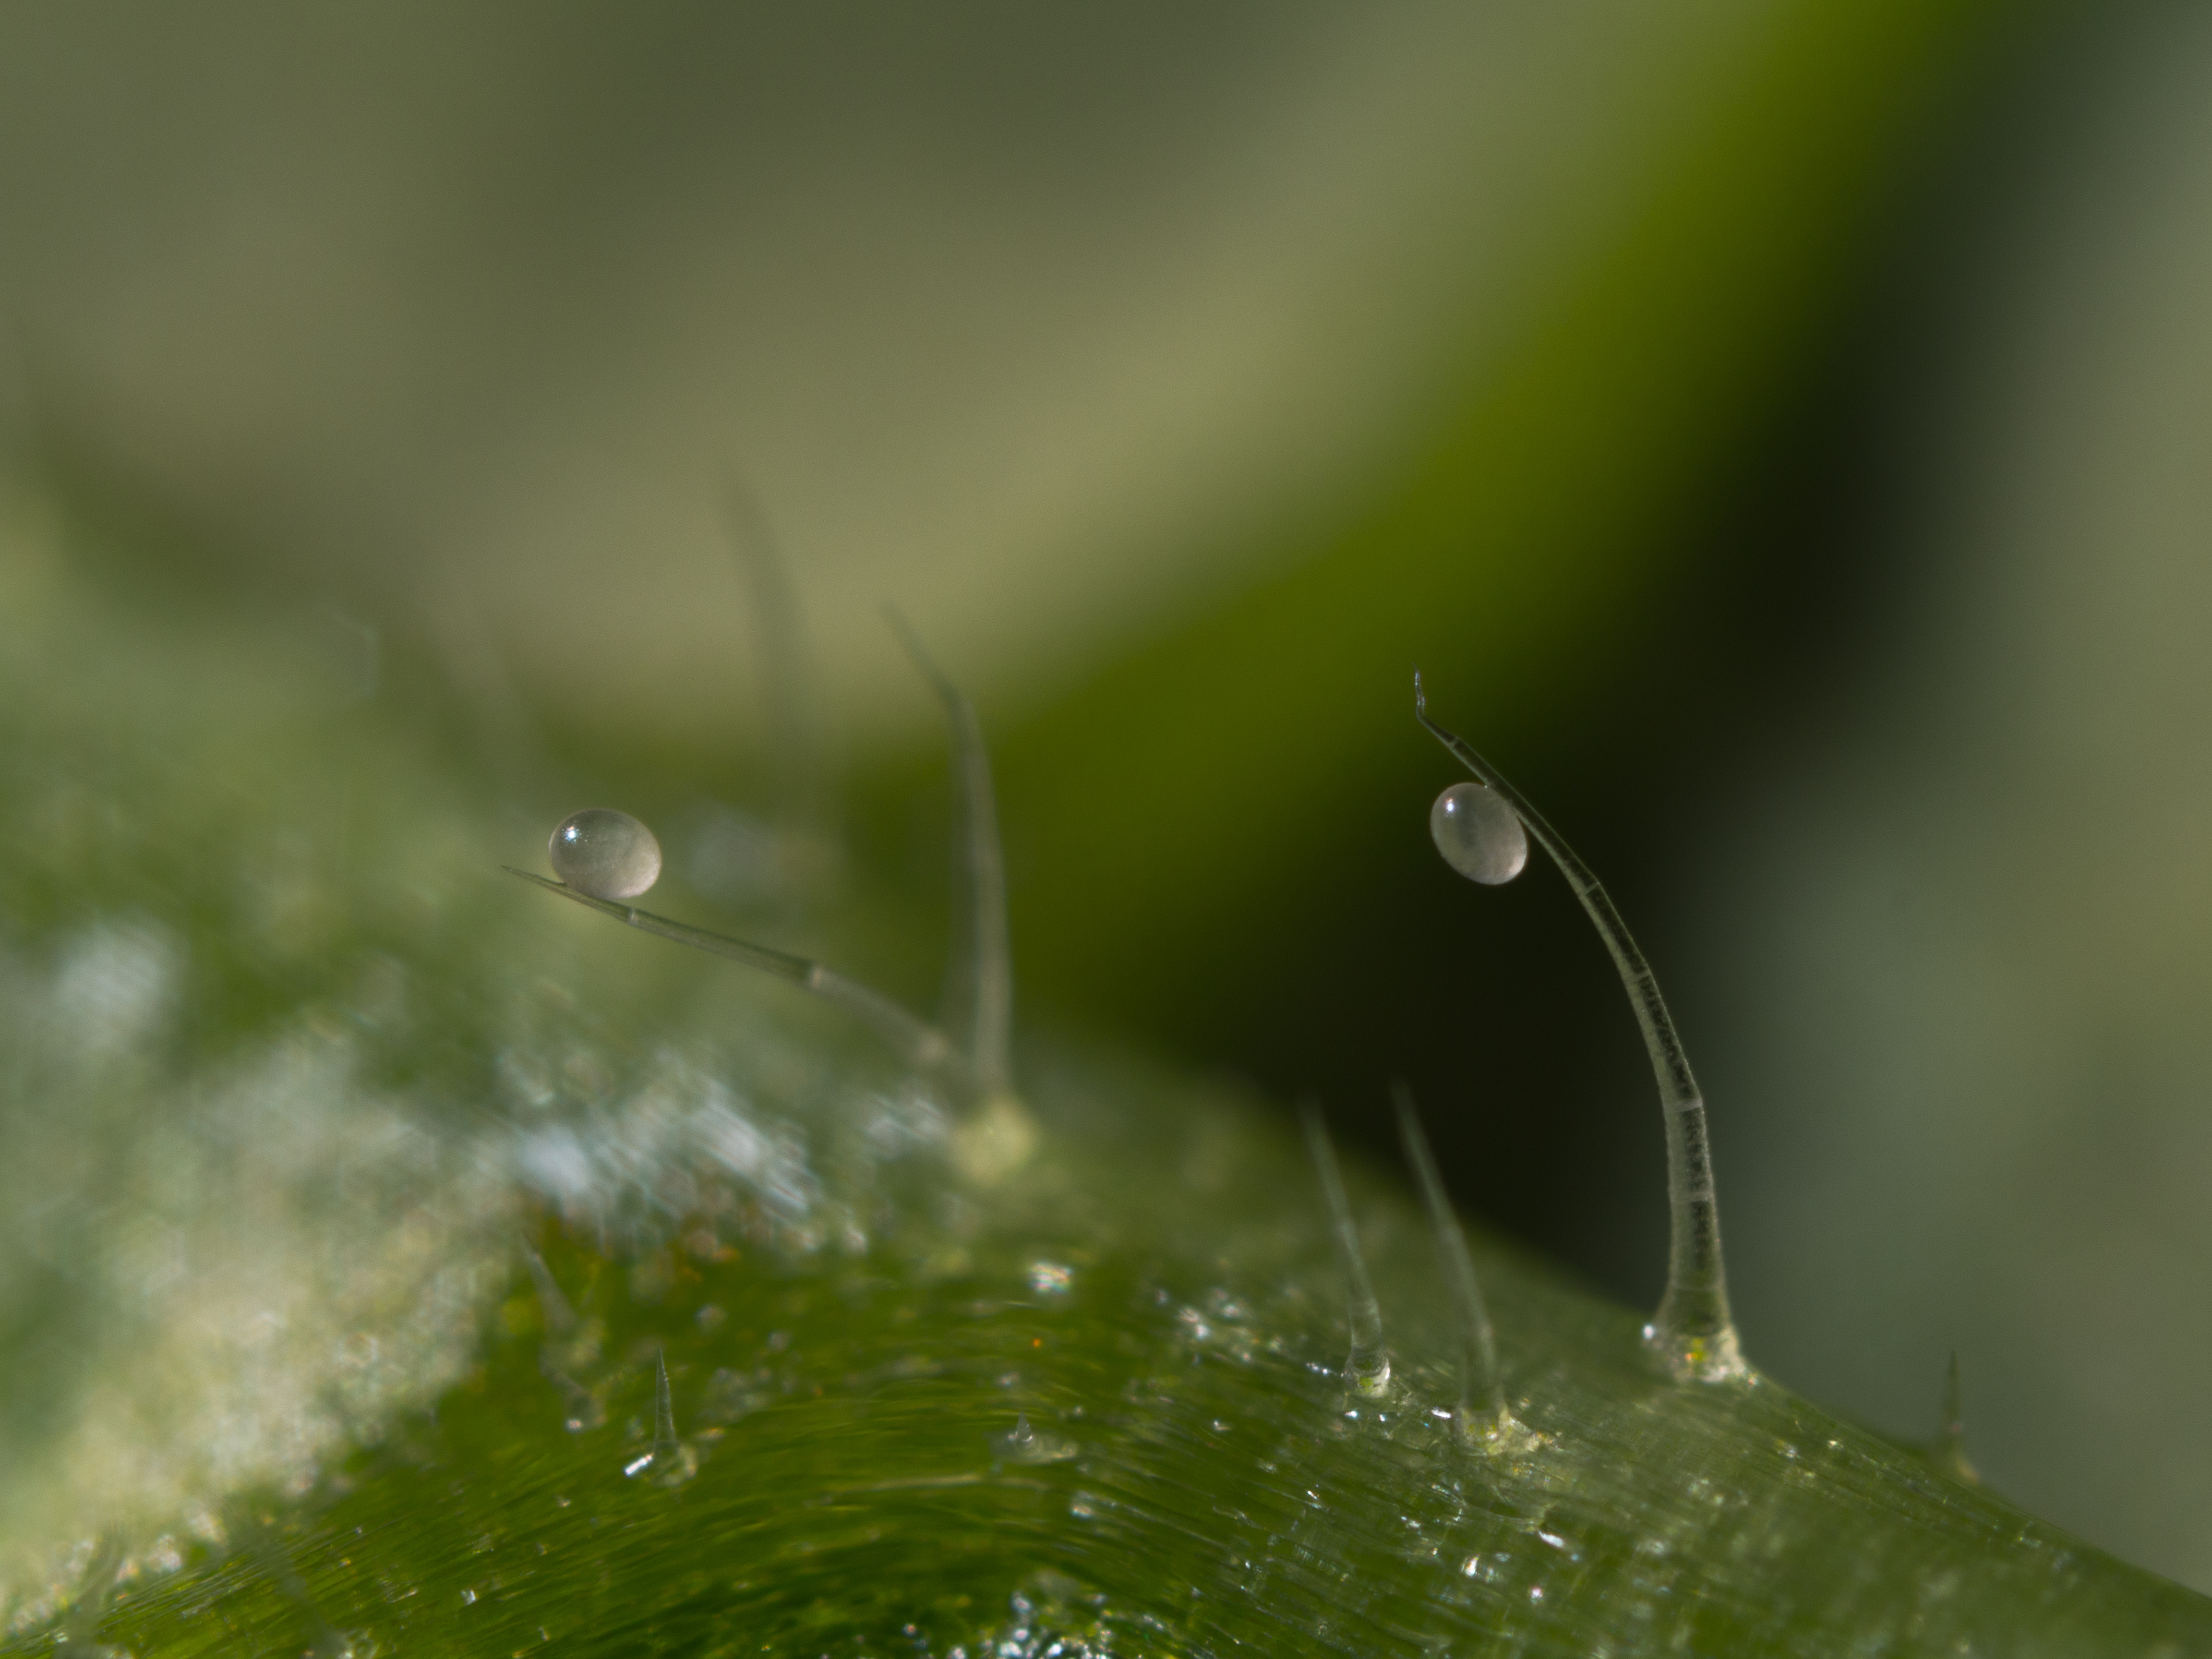 Swirskii eggs on leaf hairs